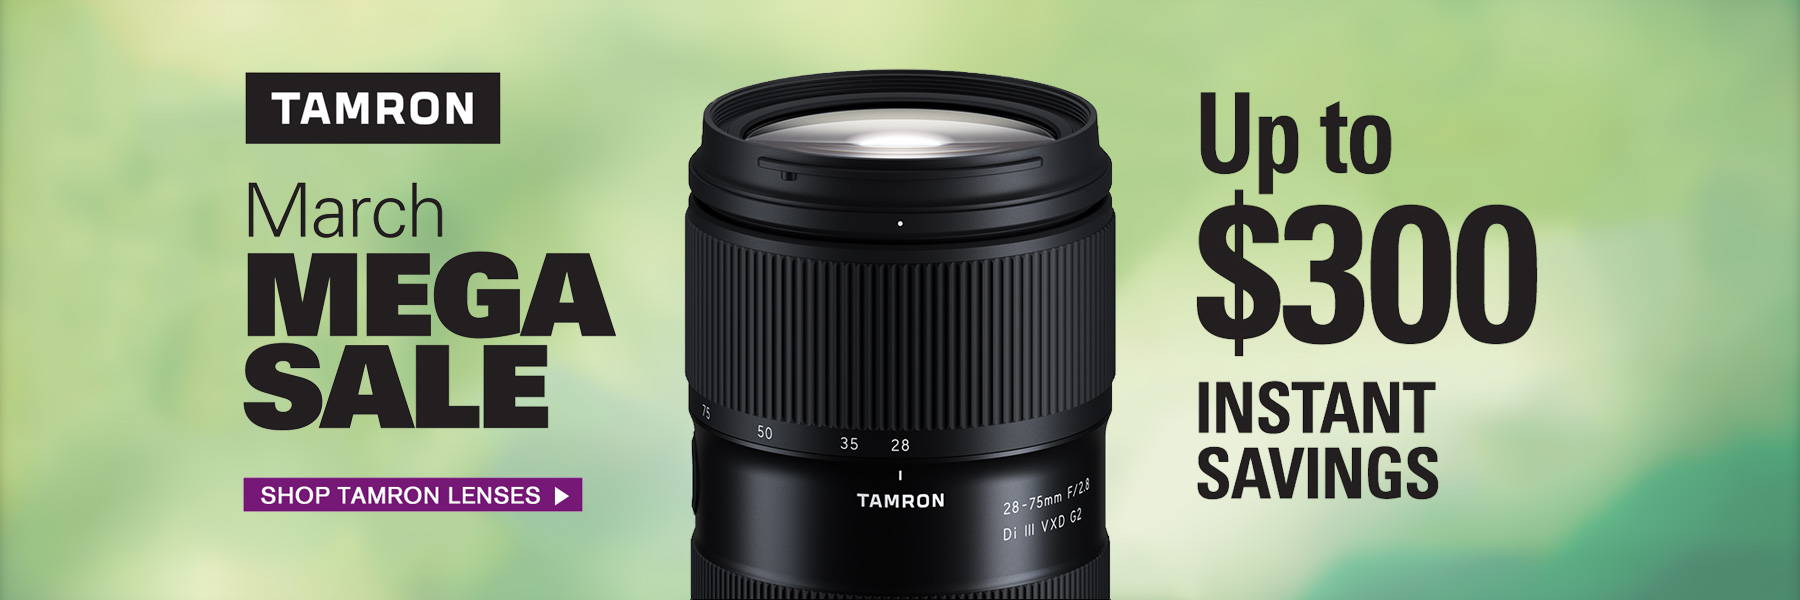 Tamron March Mega Sale - Click to Shop On Sale Tamron Lenses